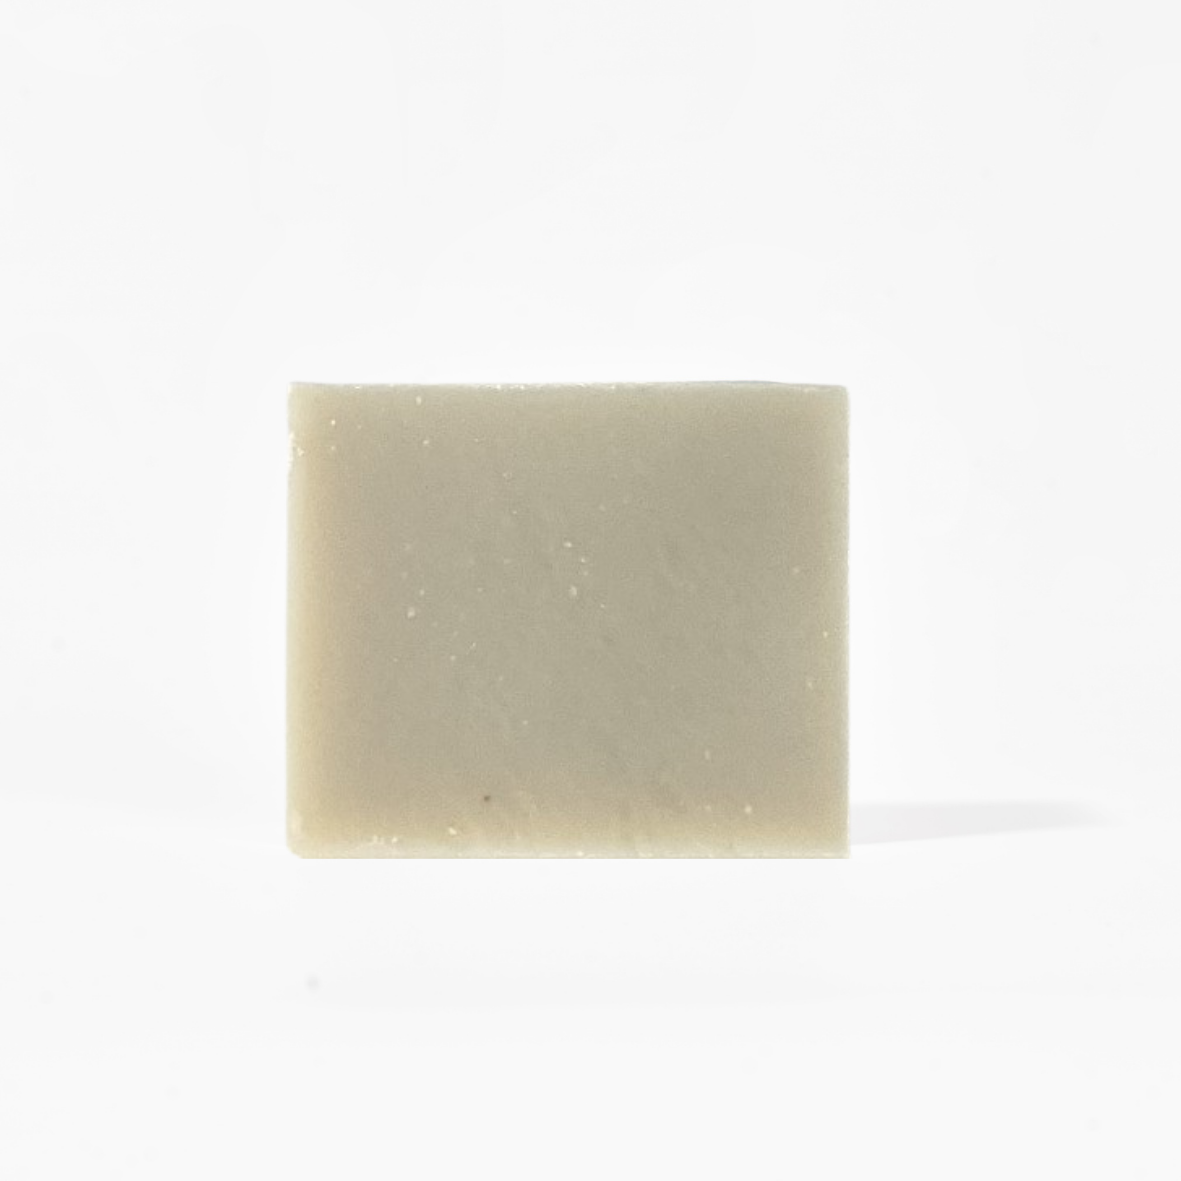 Herbal soap